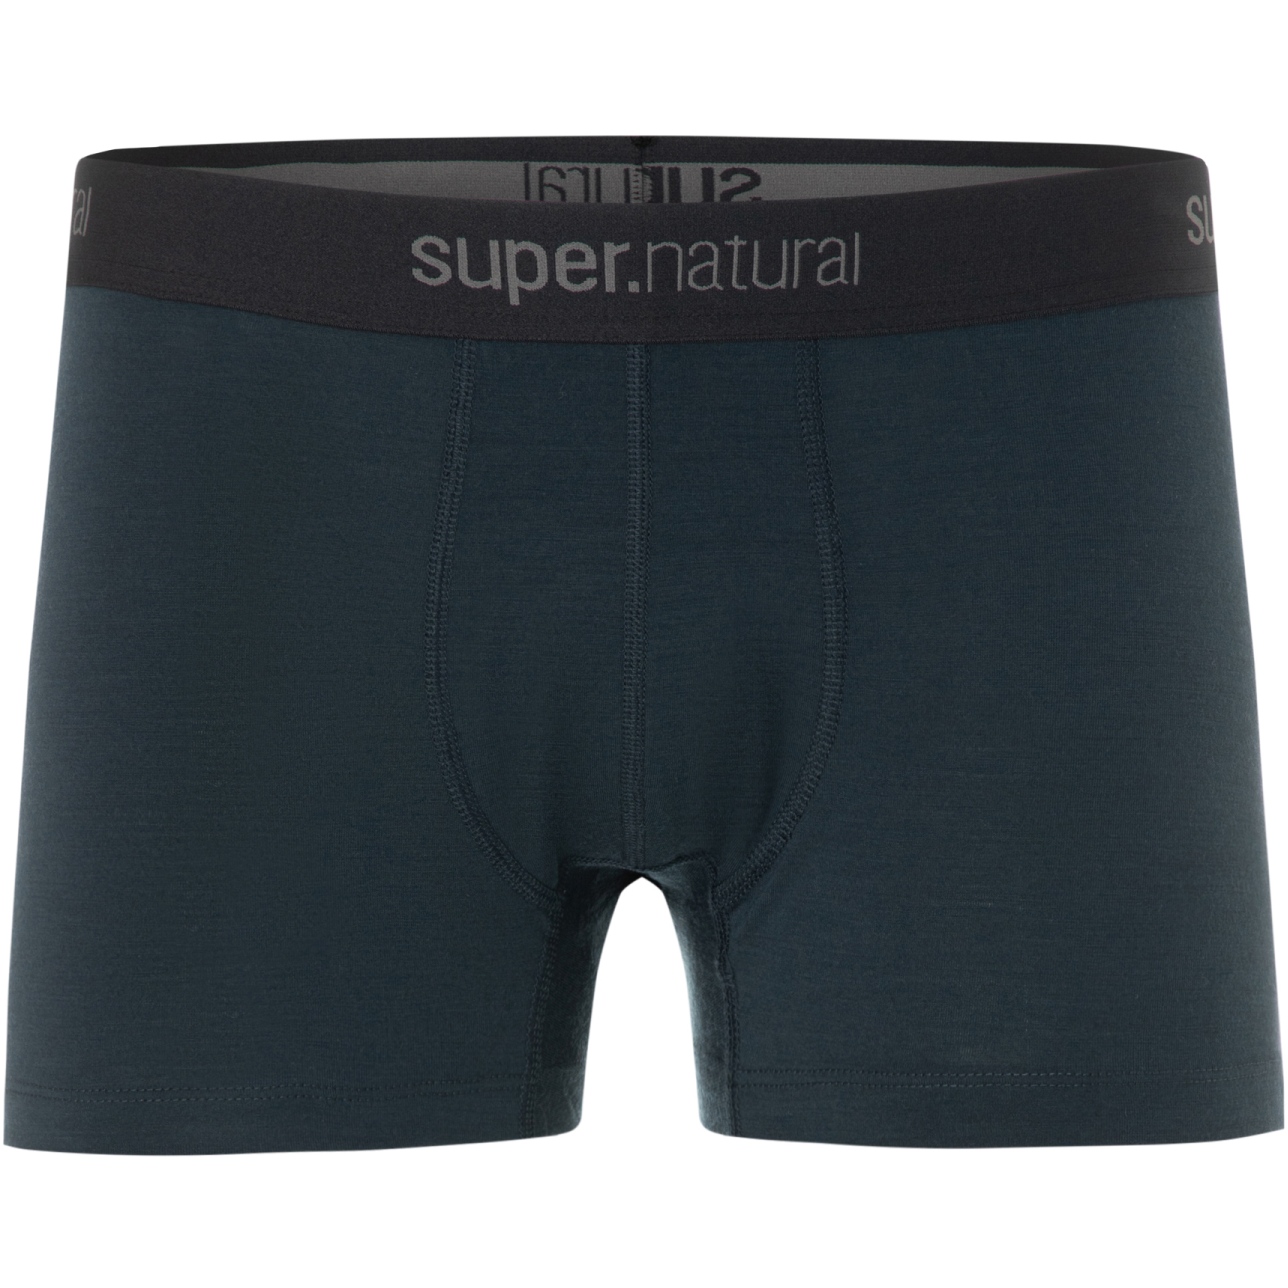 Productfoto van SUPER.NATURAL Tundra175 Boxershort Heren - Blueberry